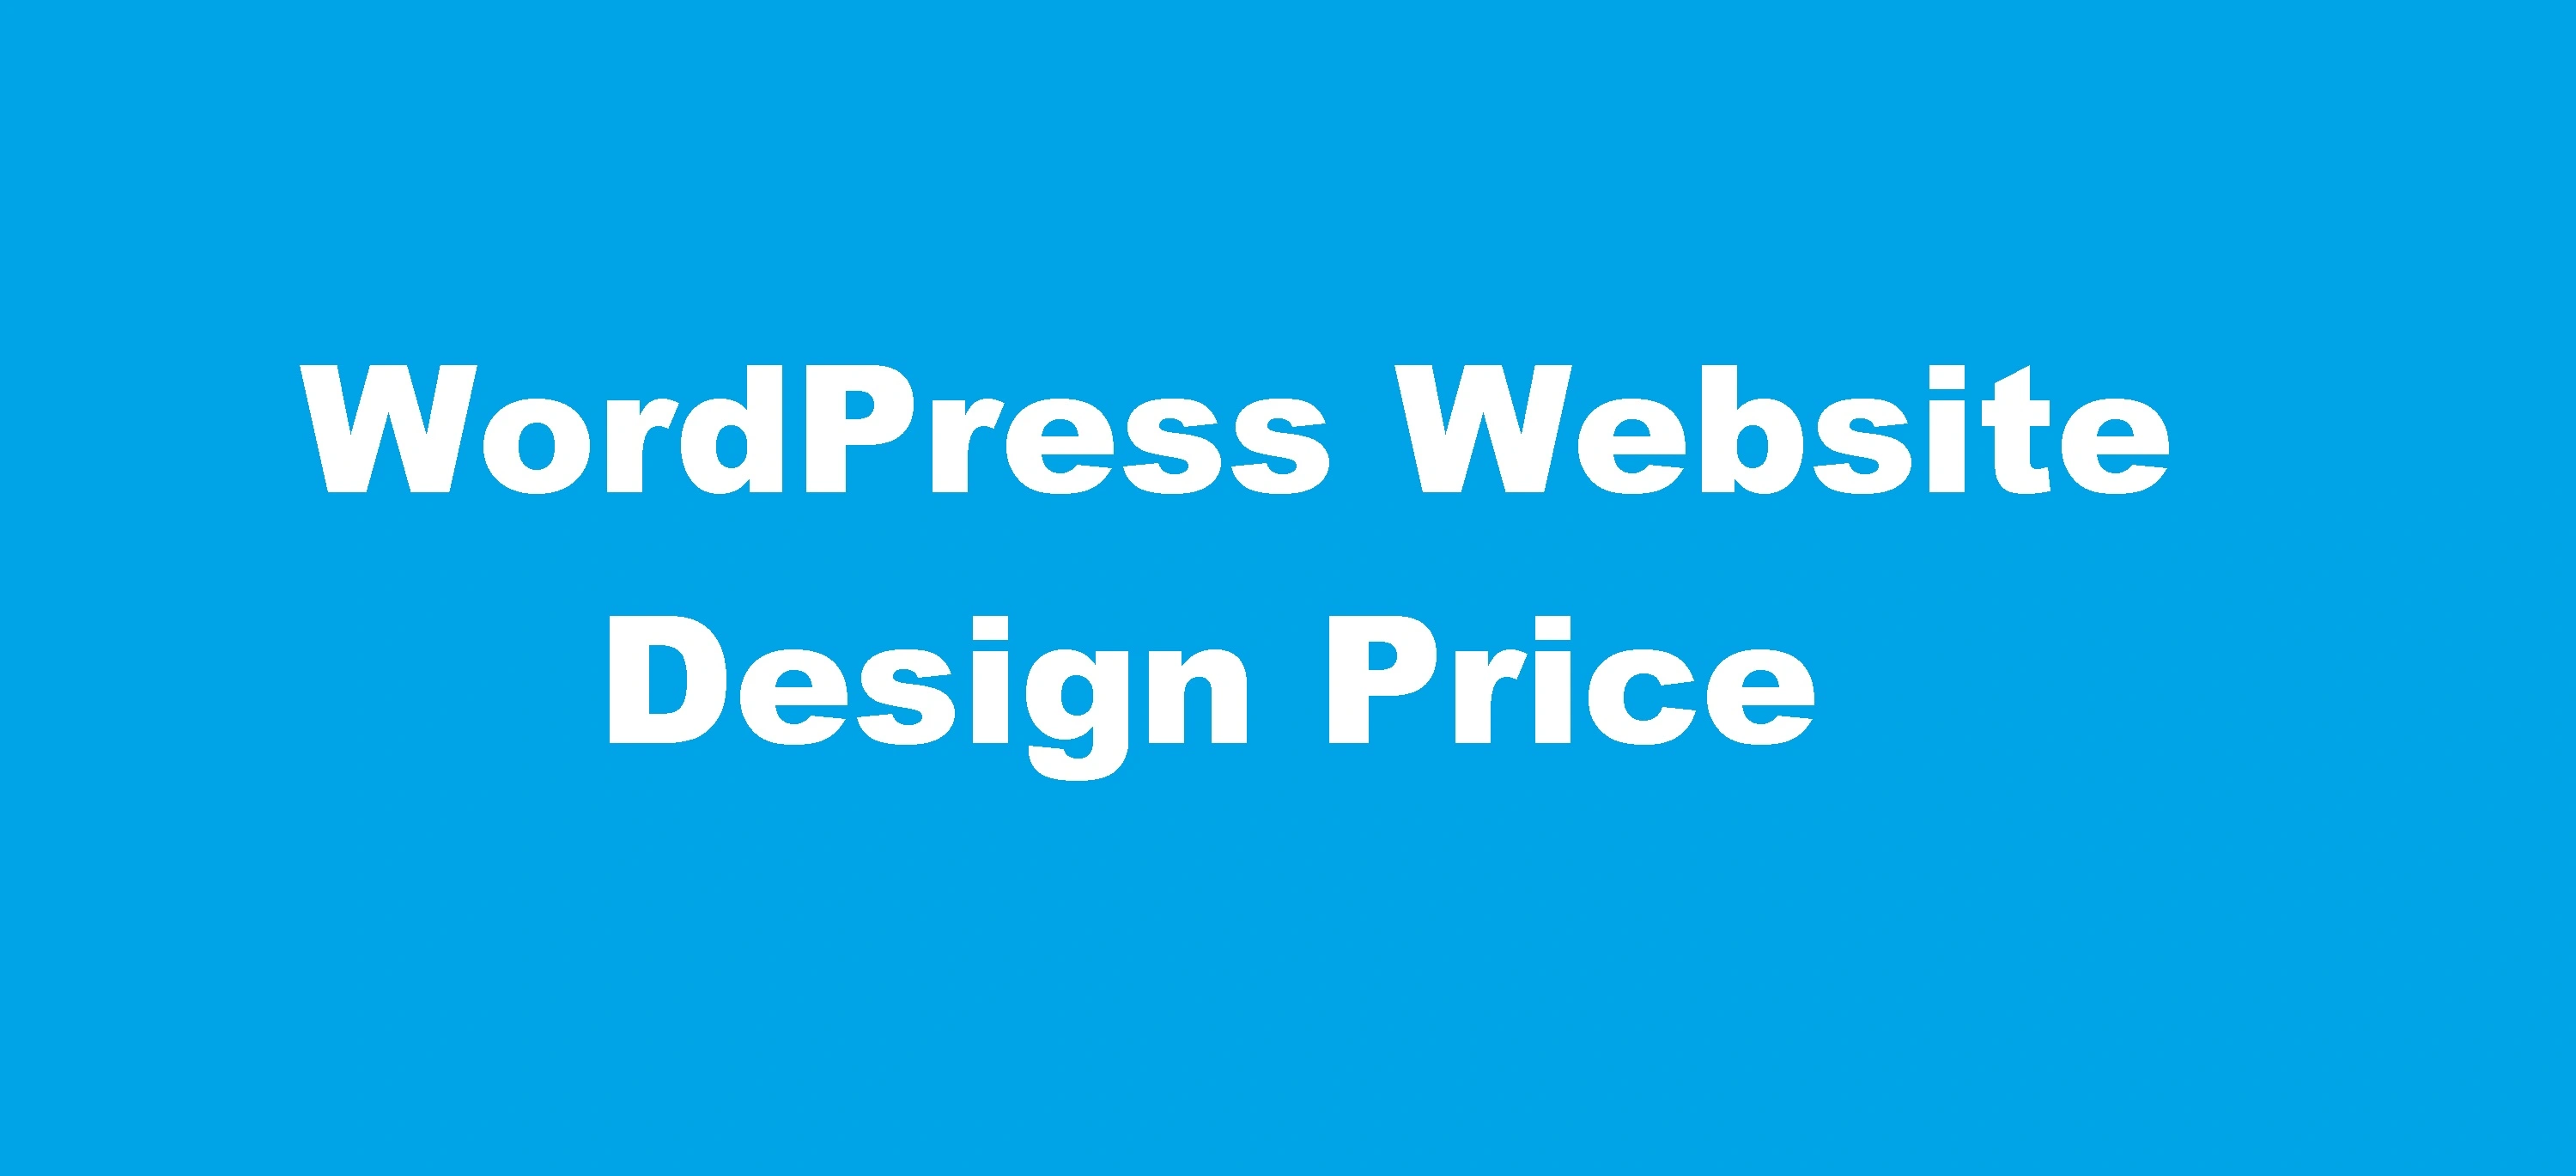 WordPress Website Design Price